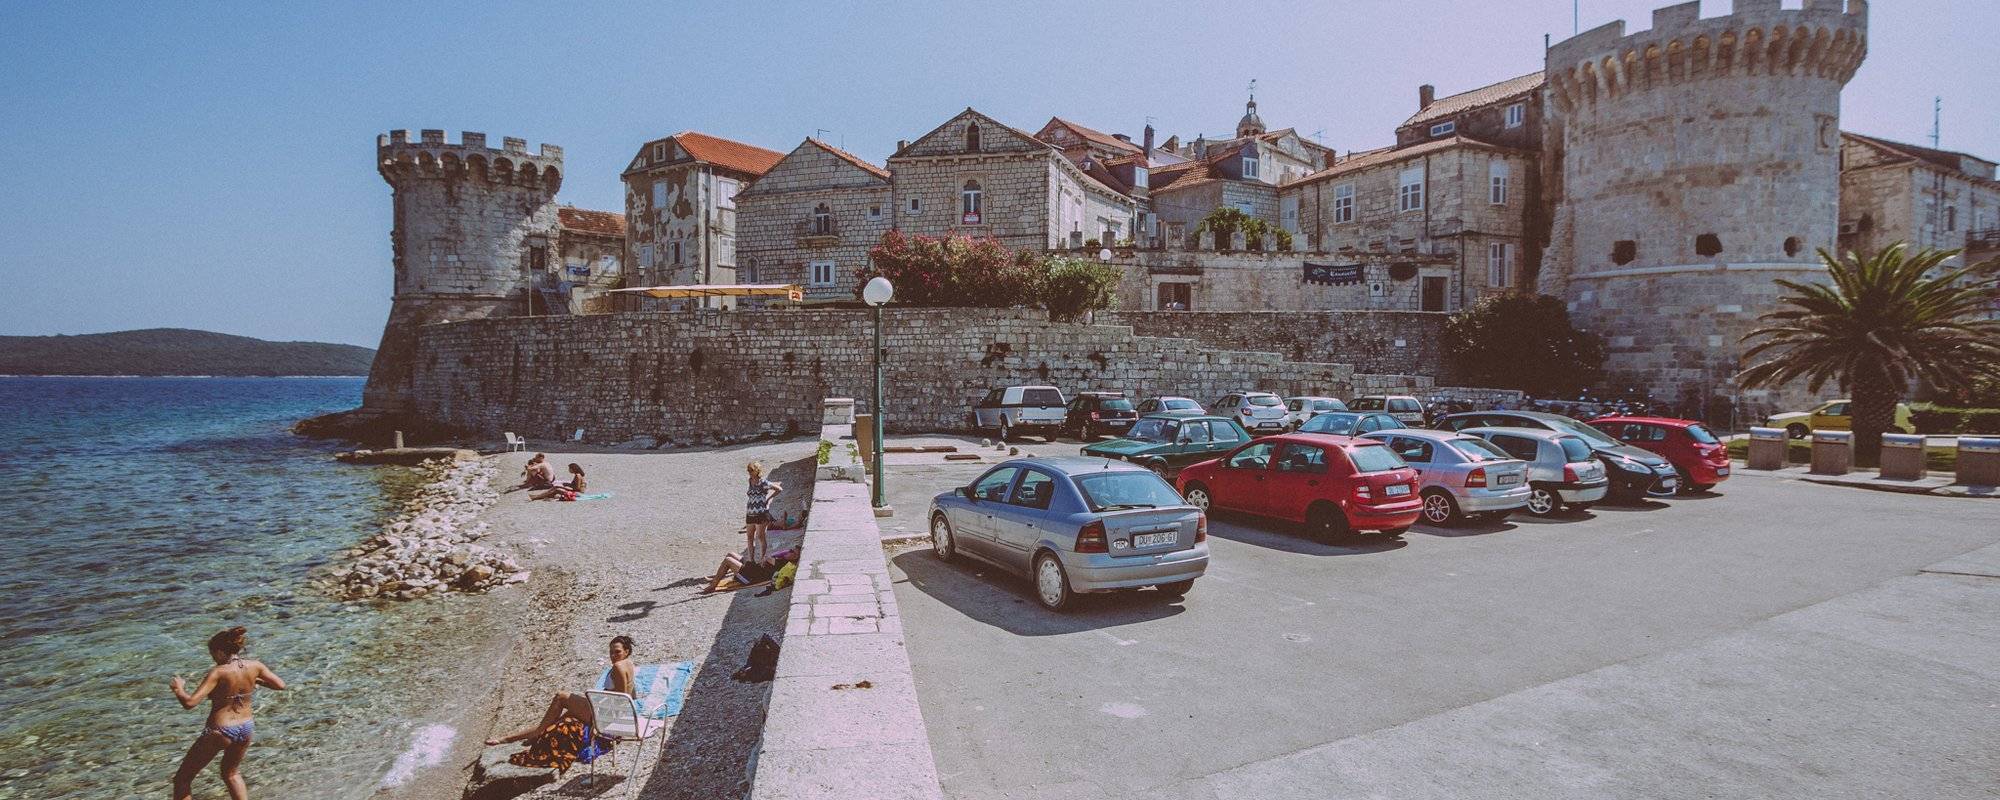 My Travels in 2016: Korčula City